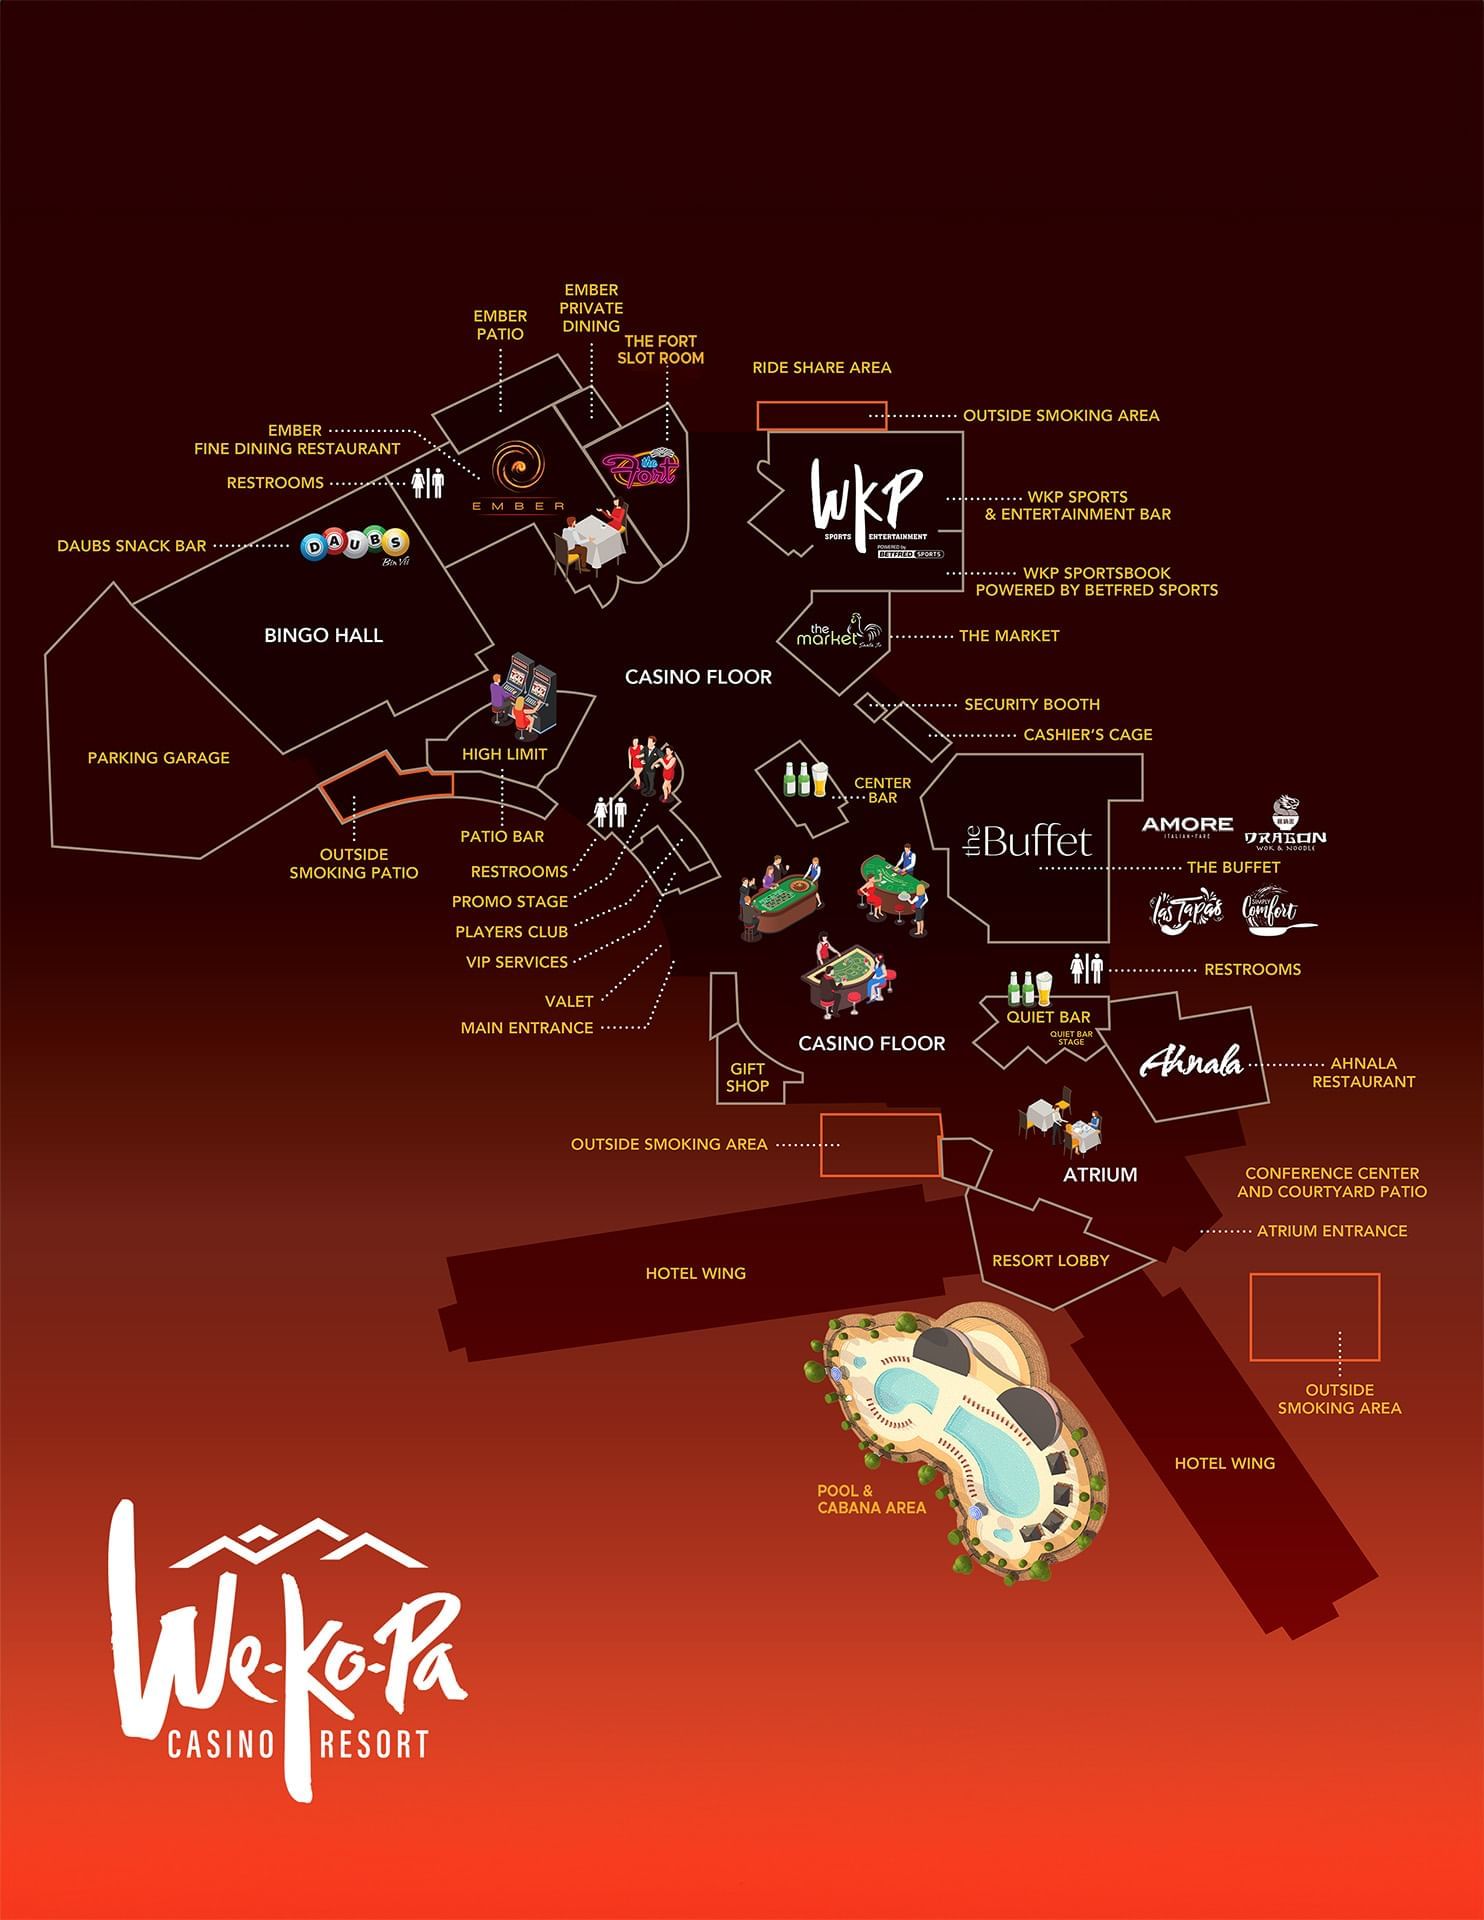 We-Ko-Pa Casino Resort Property Map